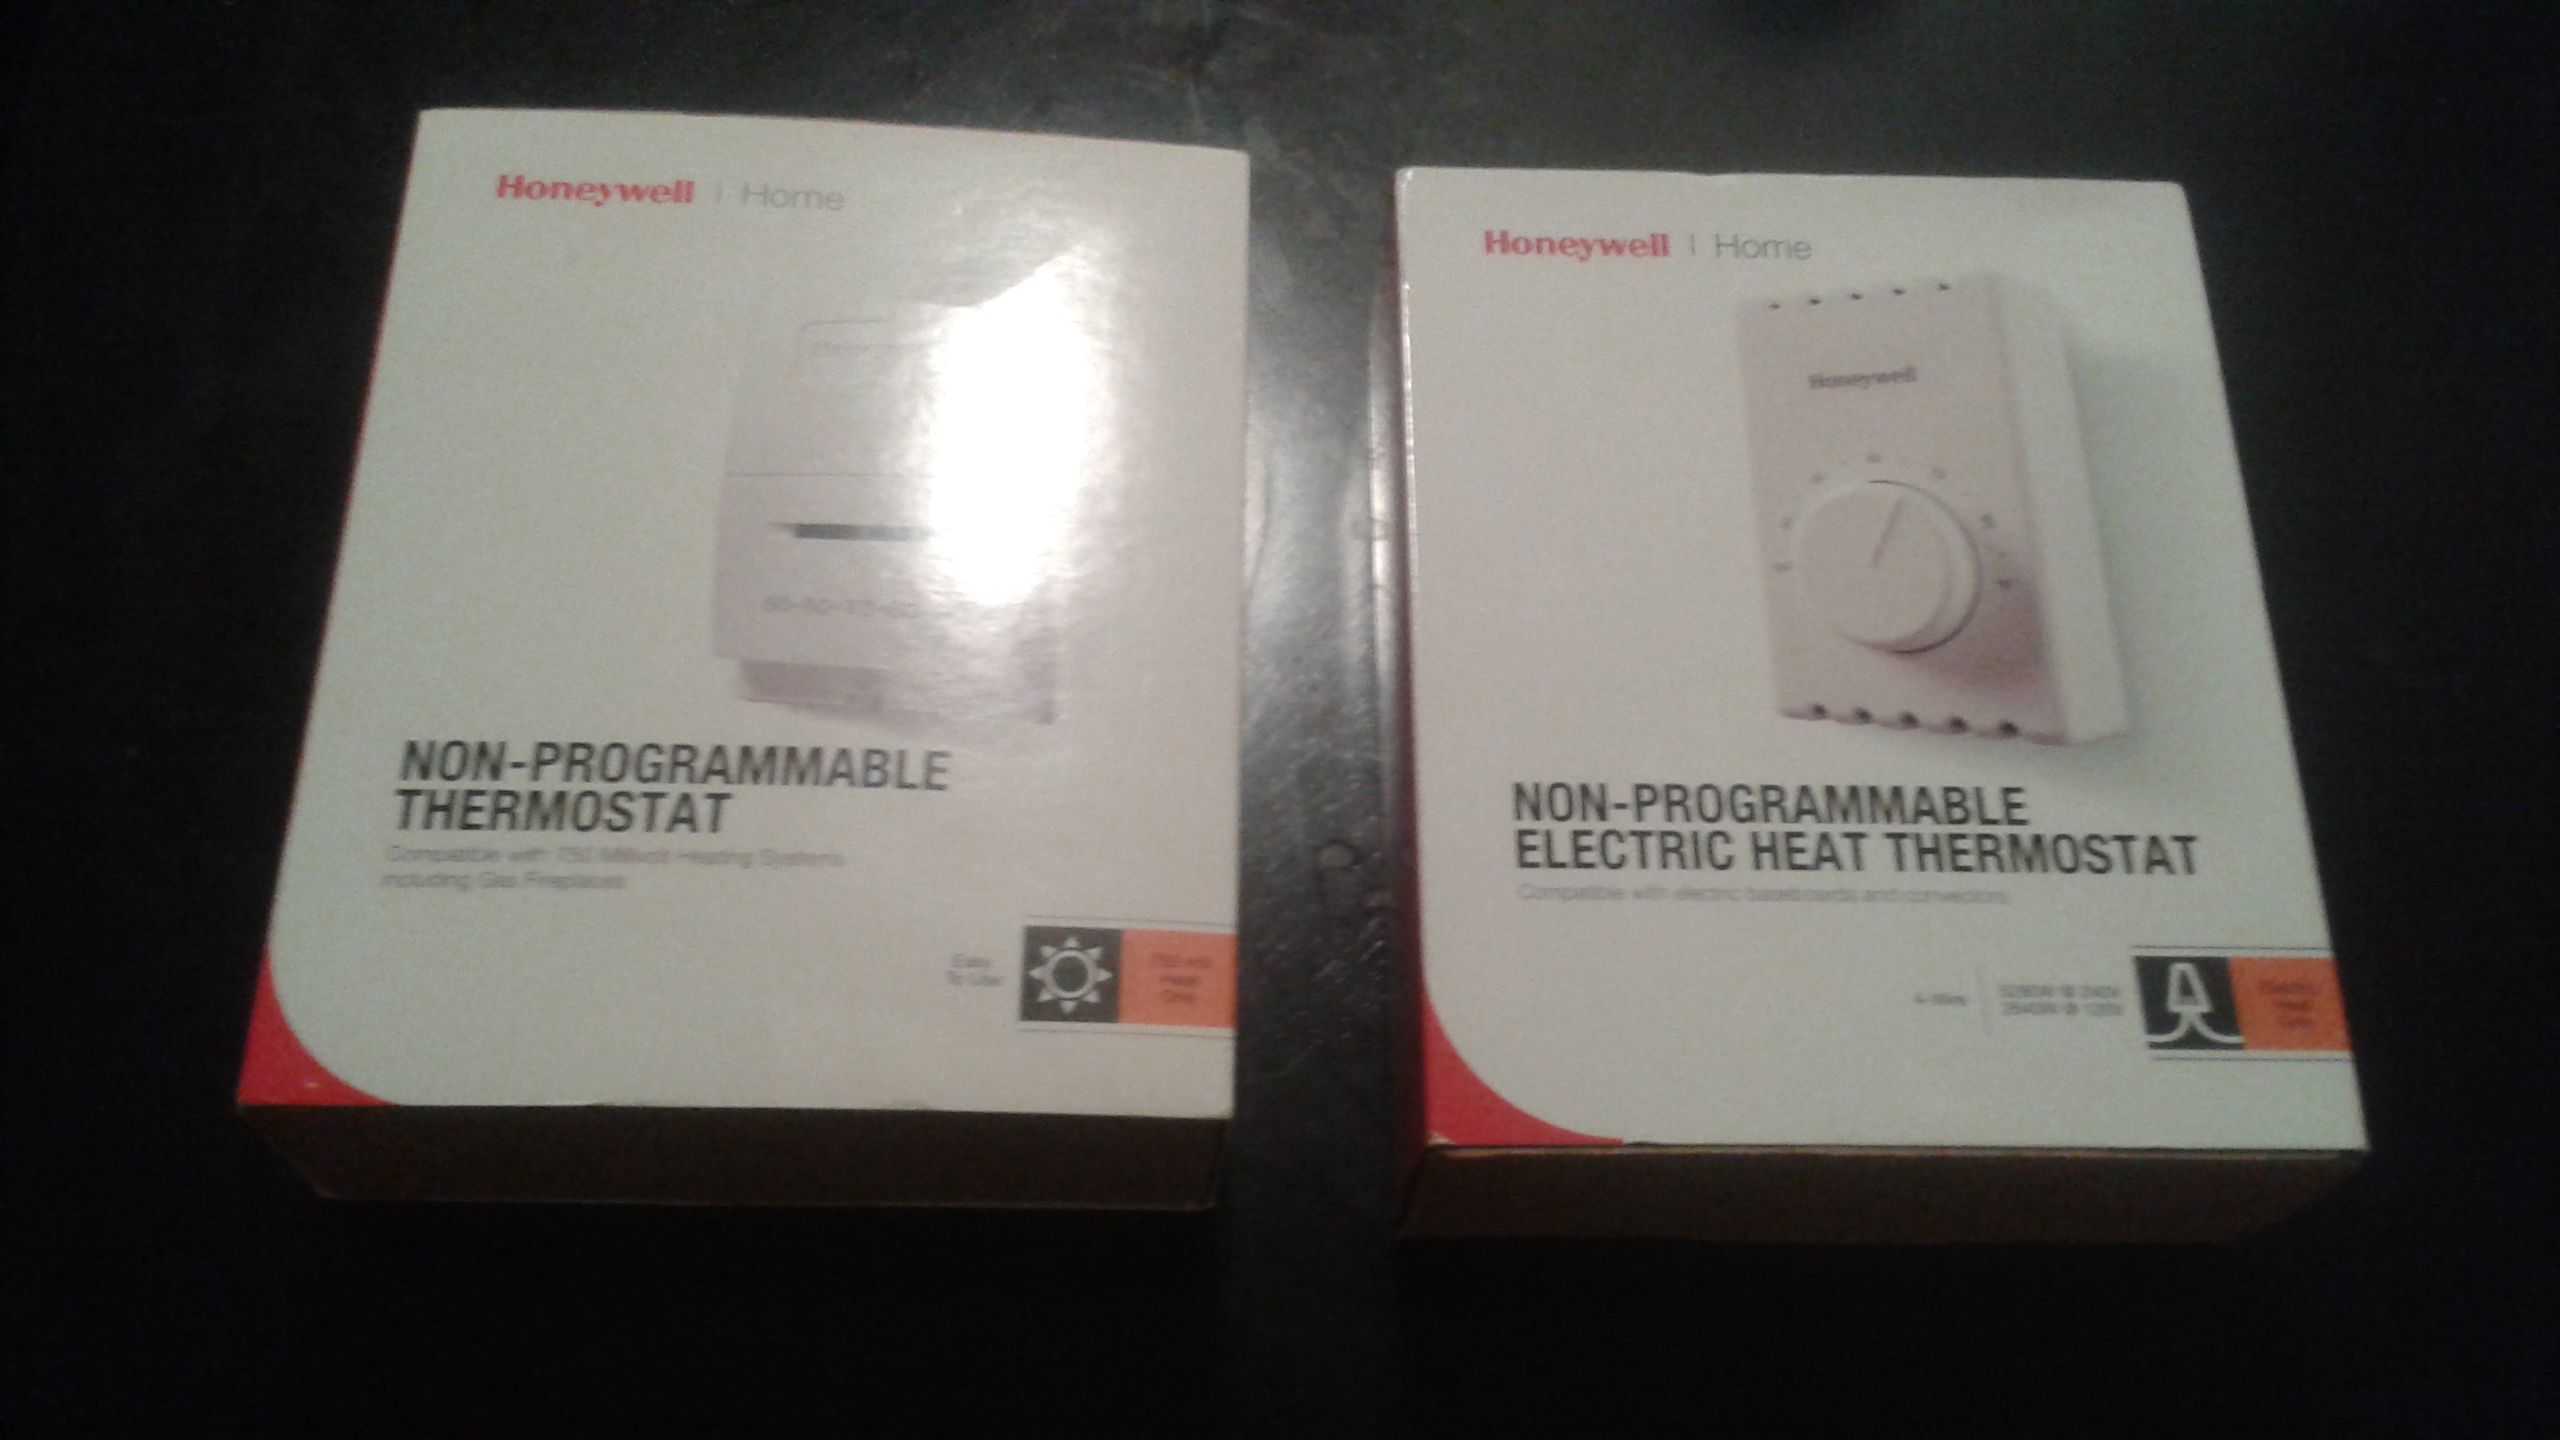 Honeywell Home Thermostats